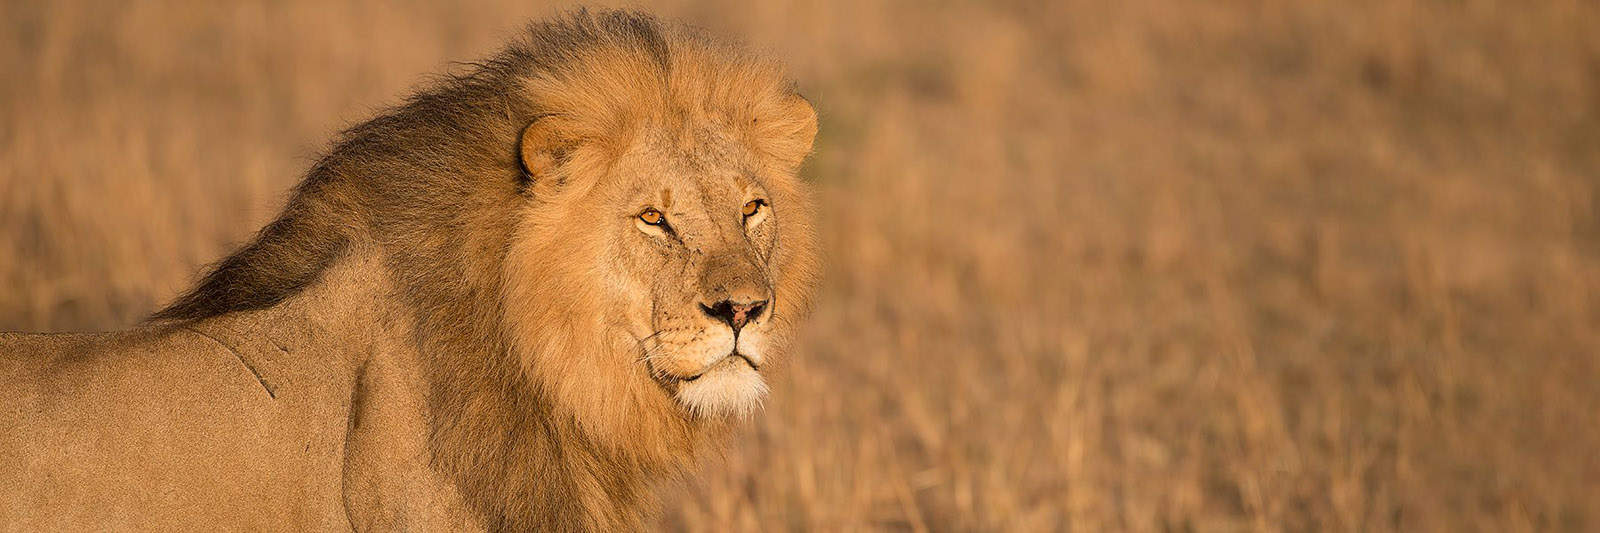 Wildlife Photography Tips by Alan Hewitt: Photo Safari Useful Insights